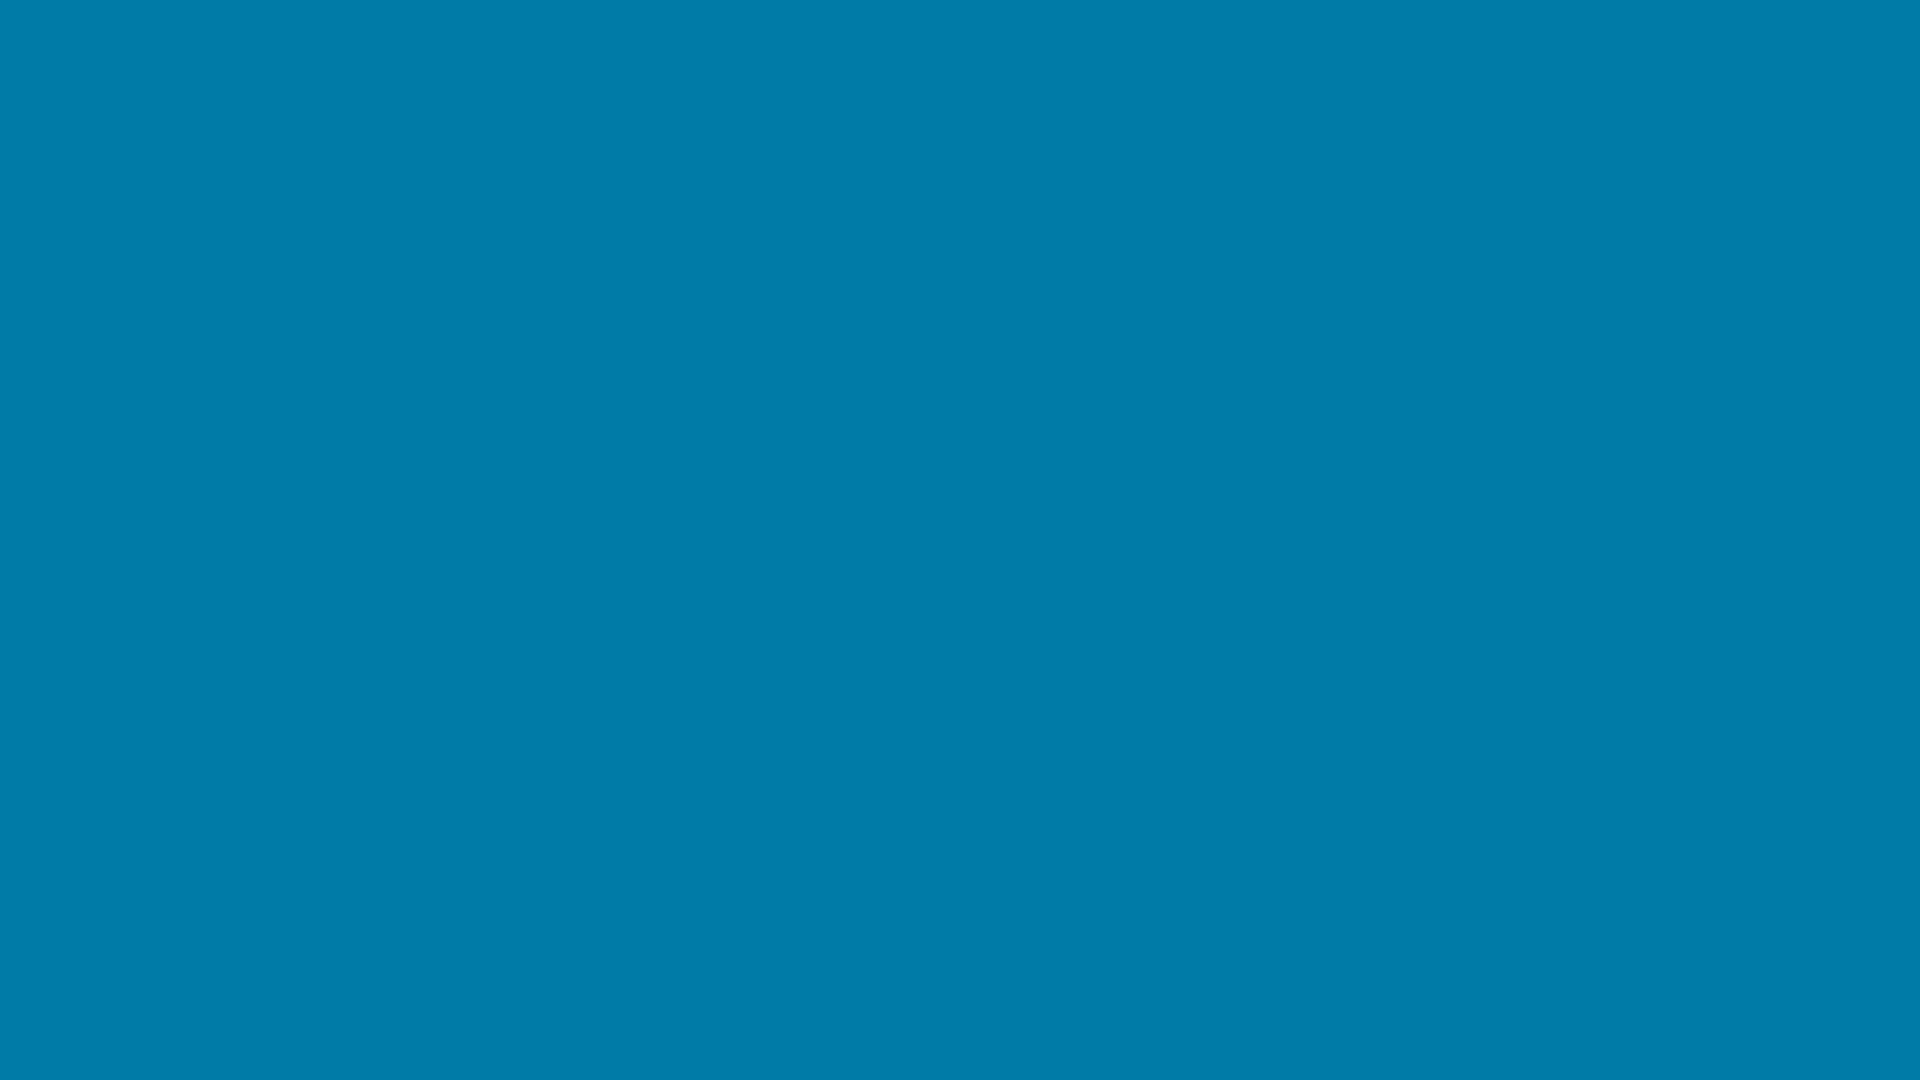 1920x1080 Celadon Blue Solid Color Background